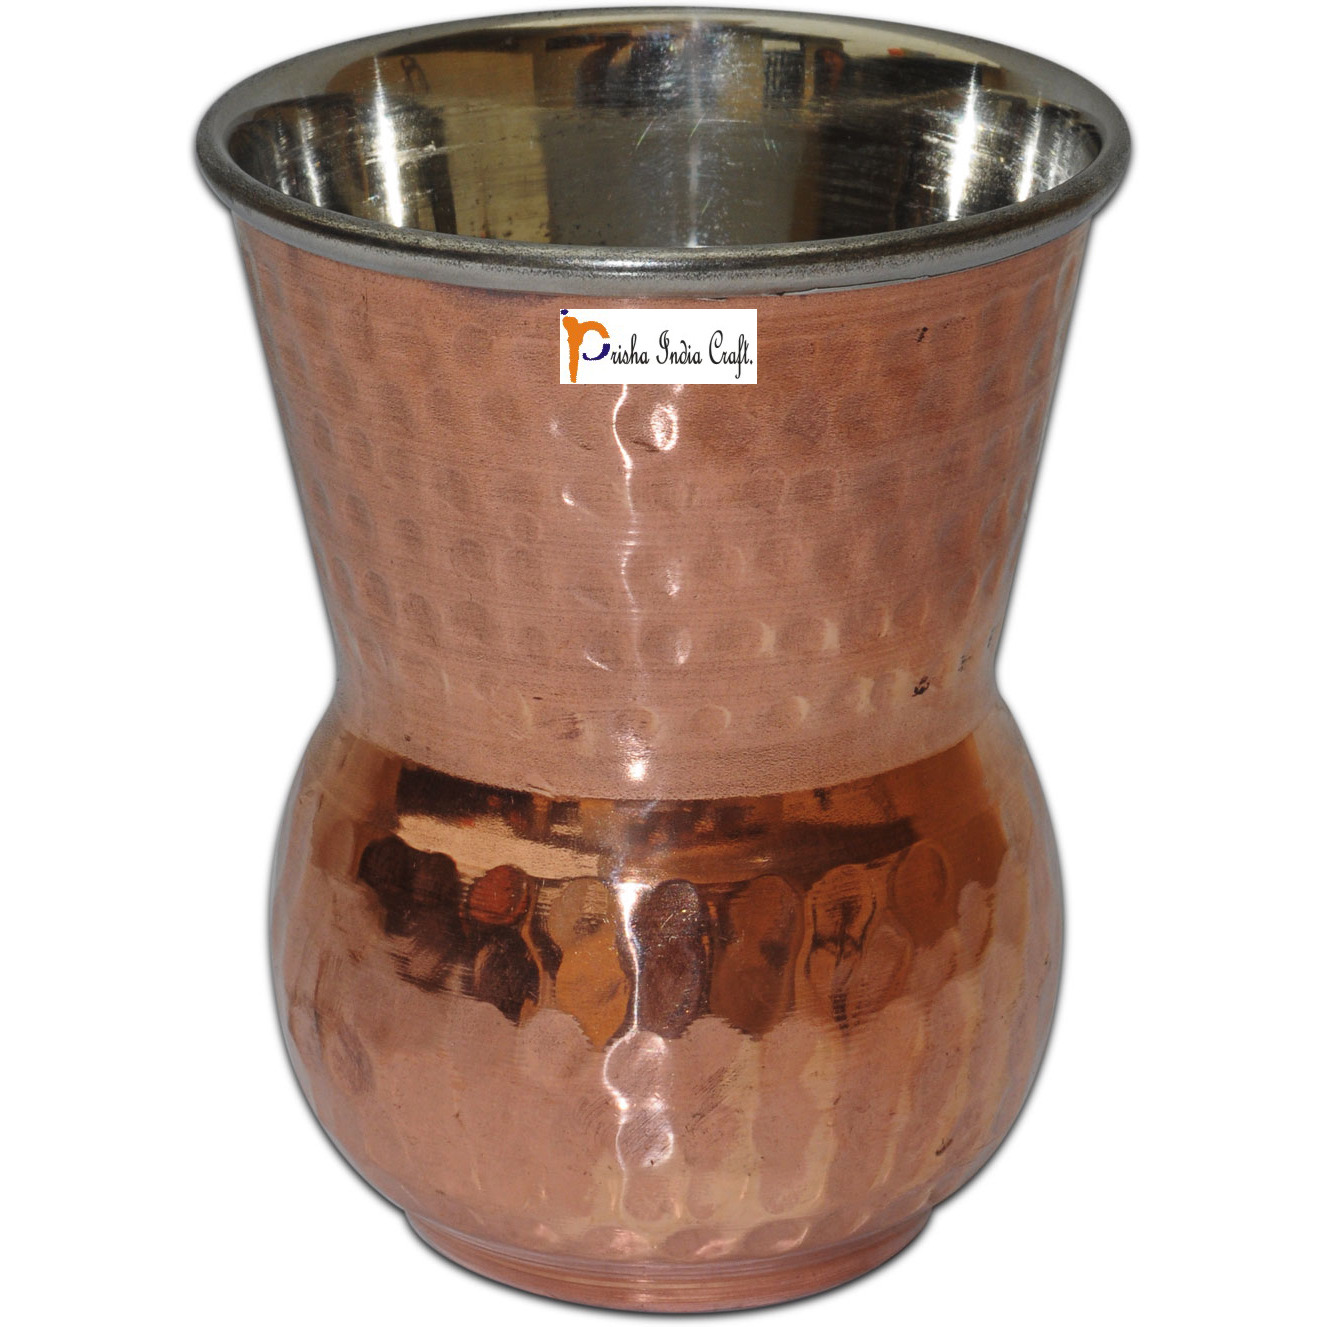 Set of 5 - Prisha India Craft B. Copper Muglai Matka Glass Inside Stainless Steel Hammered Style Drinkware Tumbler Handmade Copper Cups - Traveller's Copper Mug